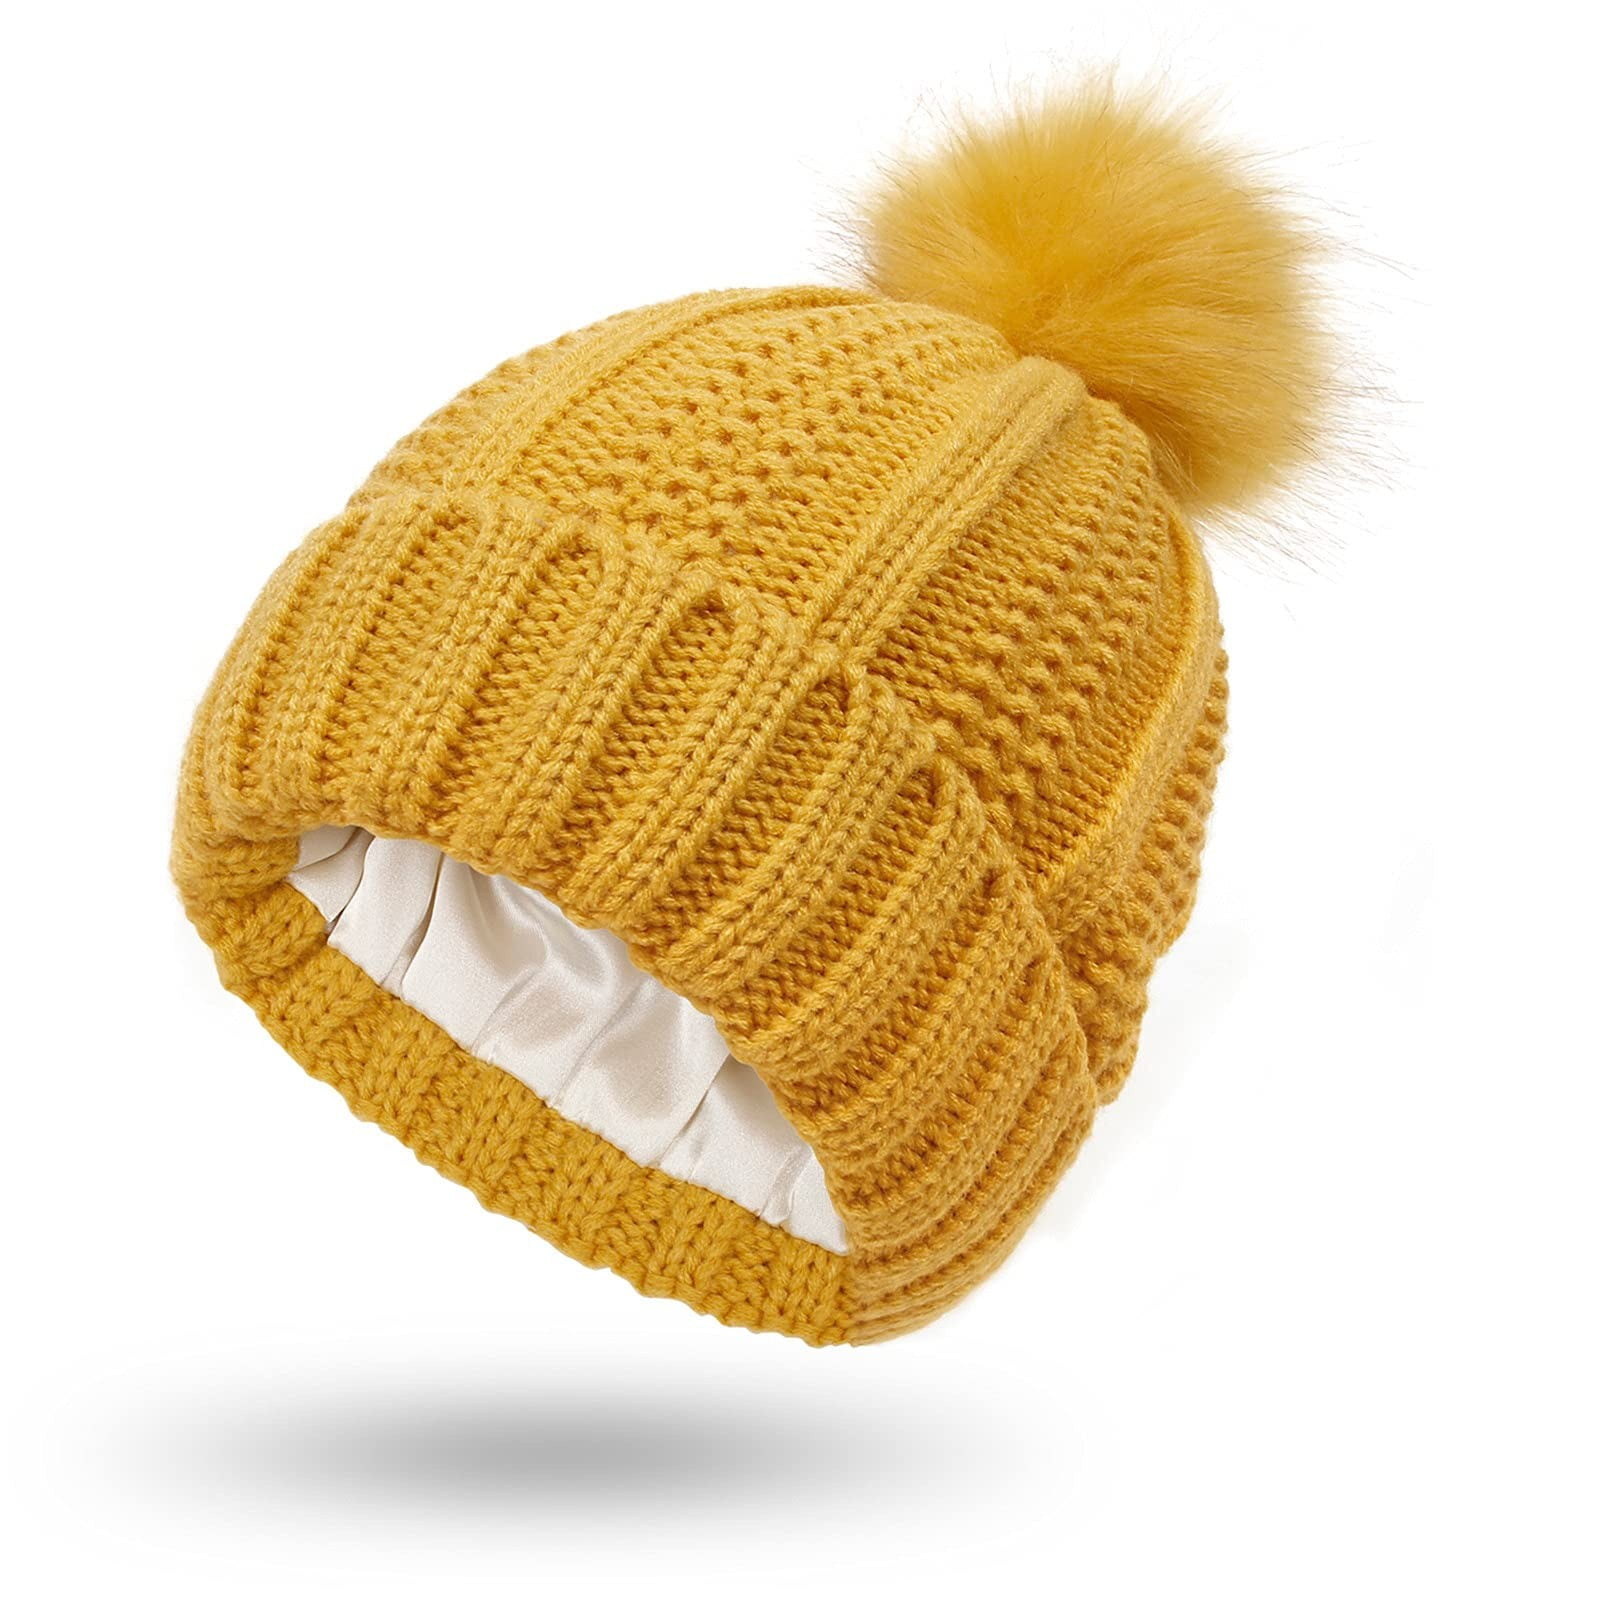 EHTMSAK Beanie Pom Poms Balls Christmas Hats for Women Cable Knit